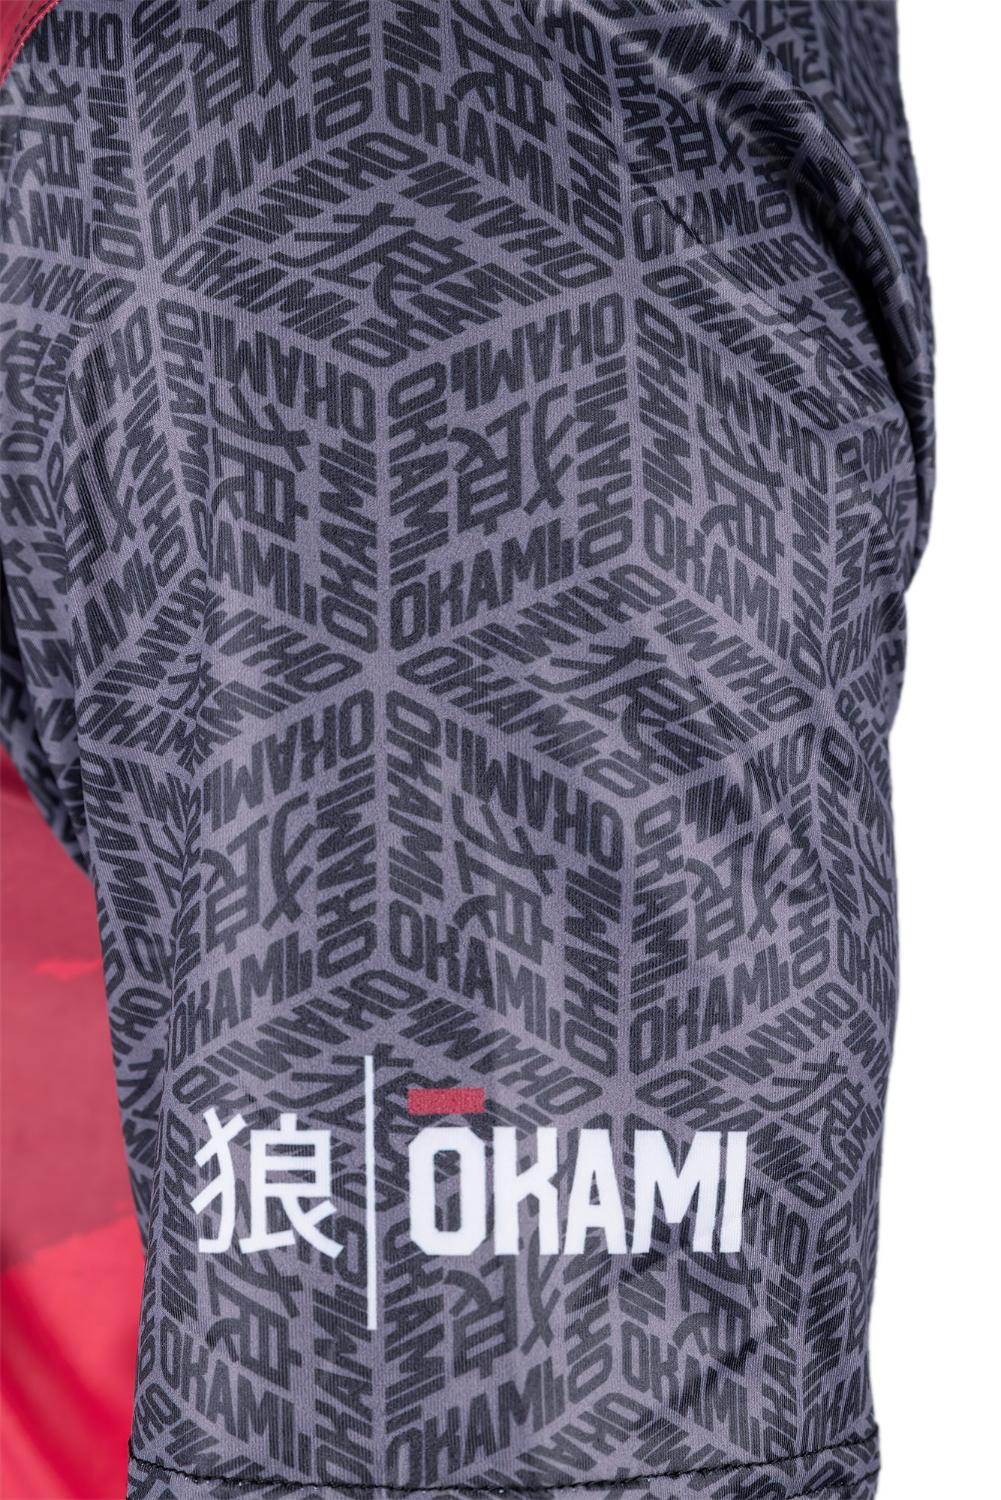 OKAMI Functional Shirt Cube